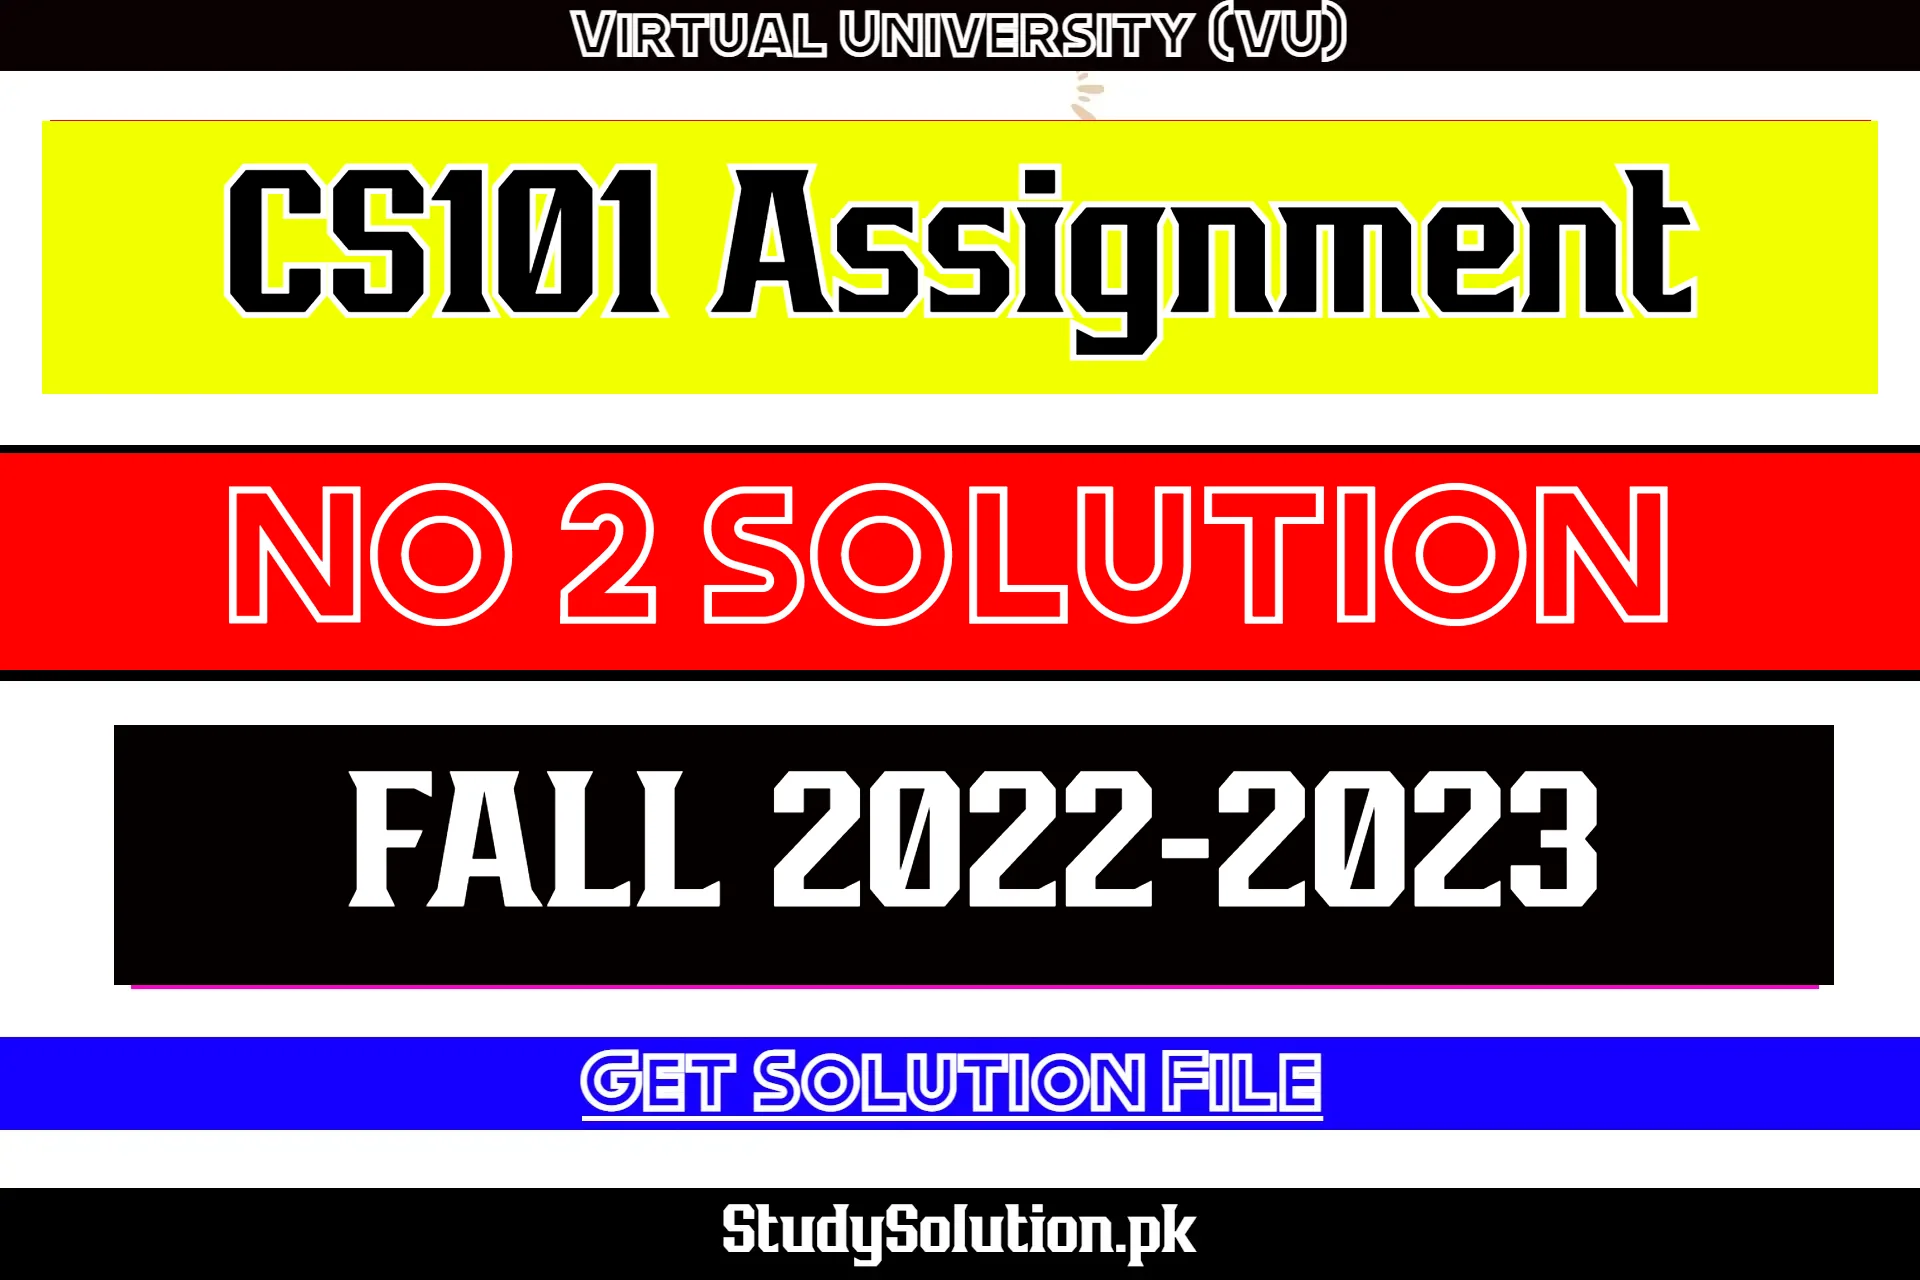 CS101 Assignment No 2 Solution Fall 2022